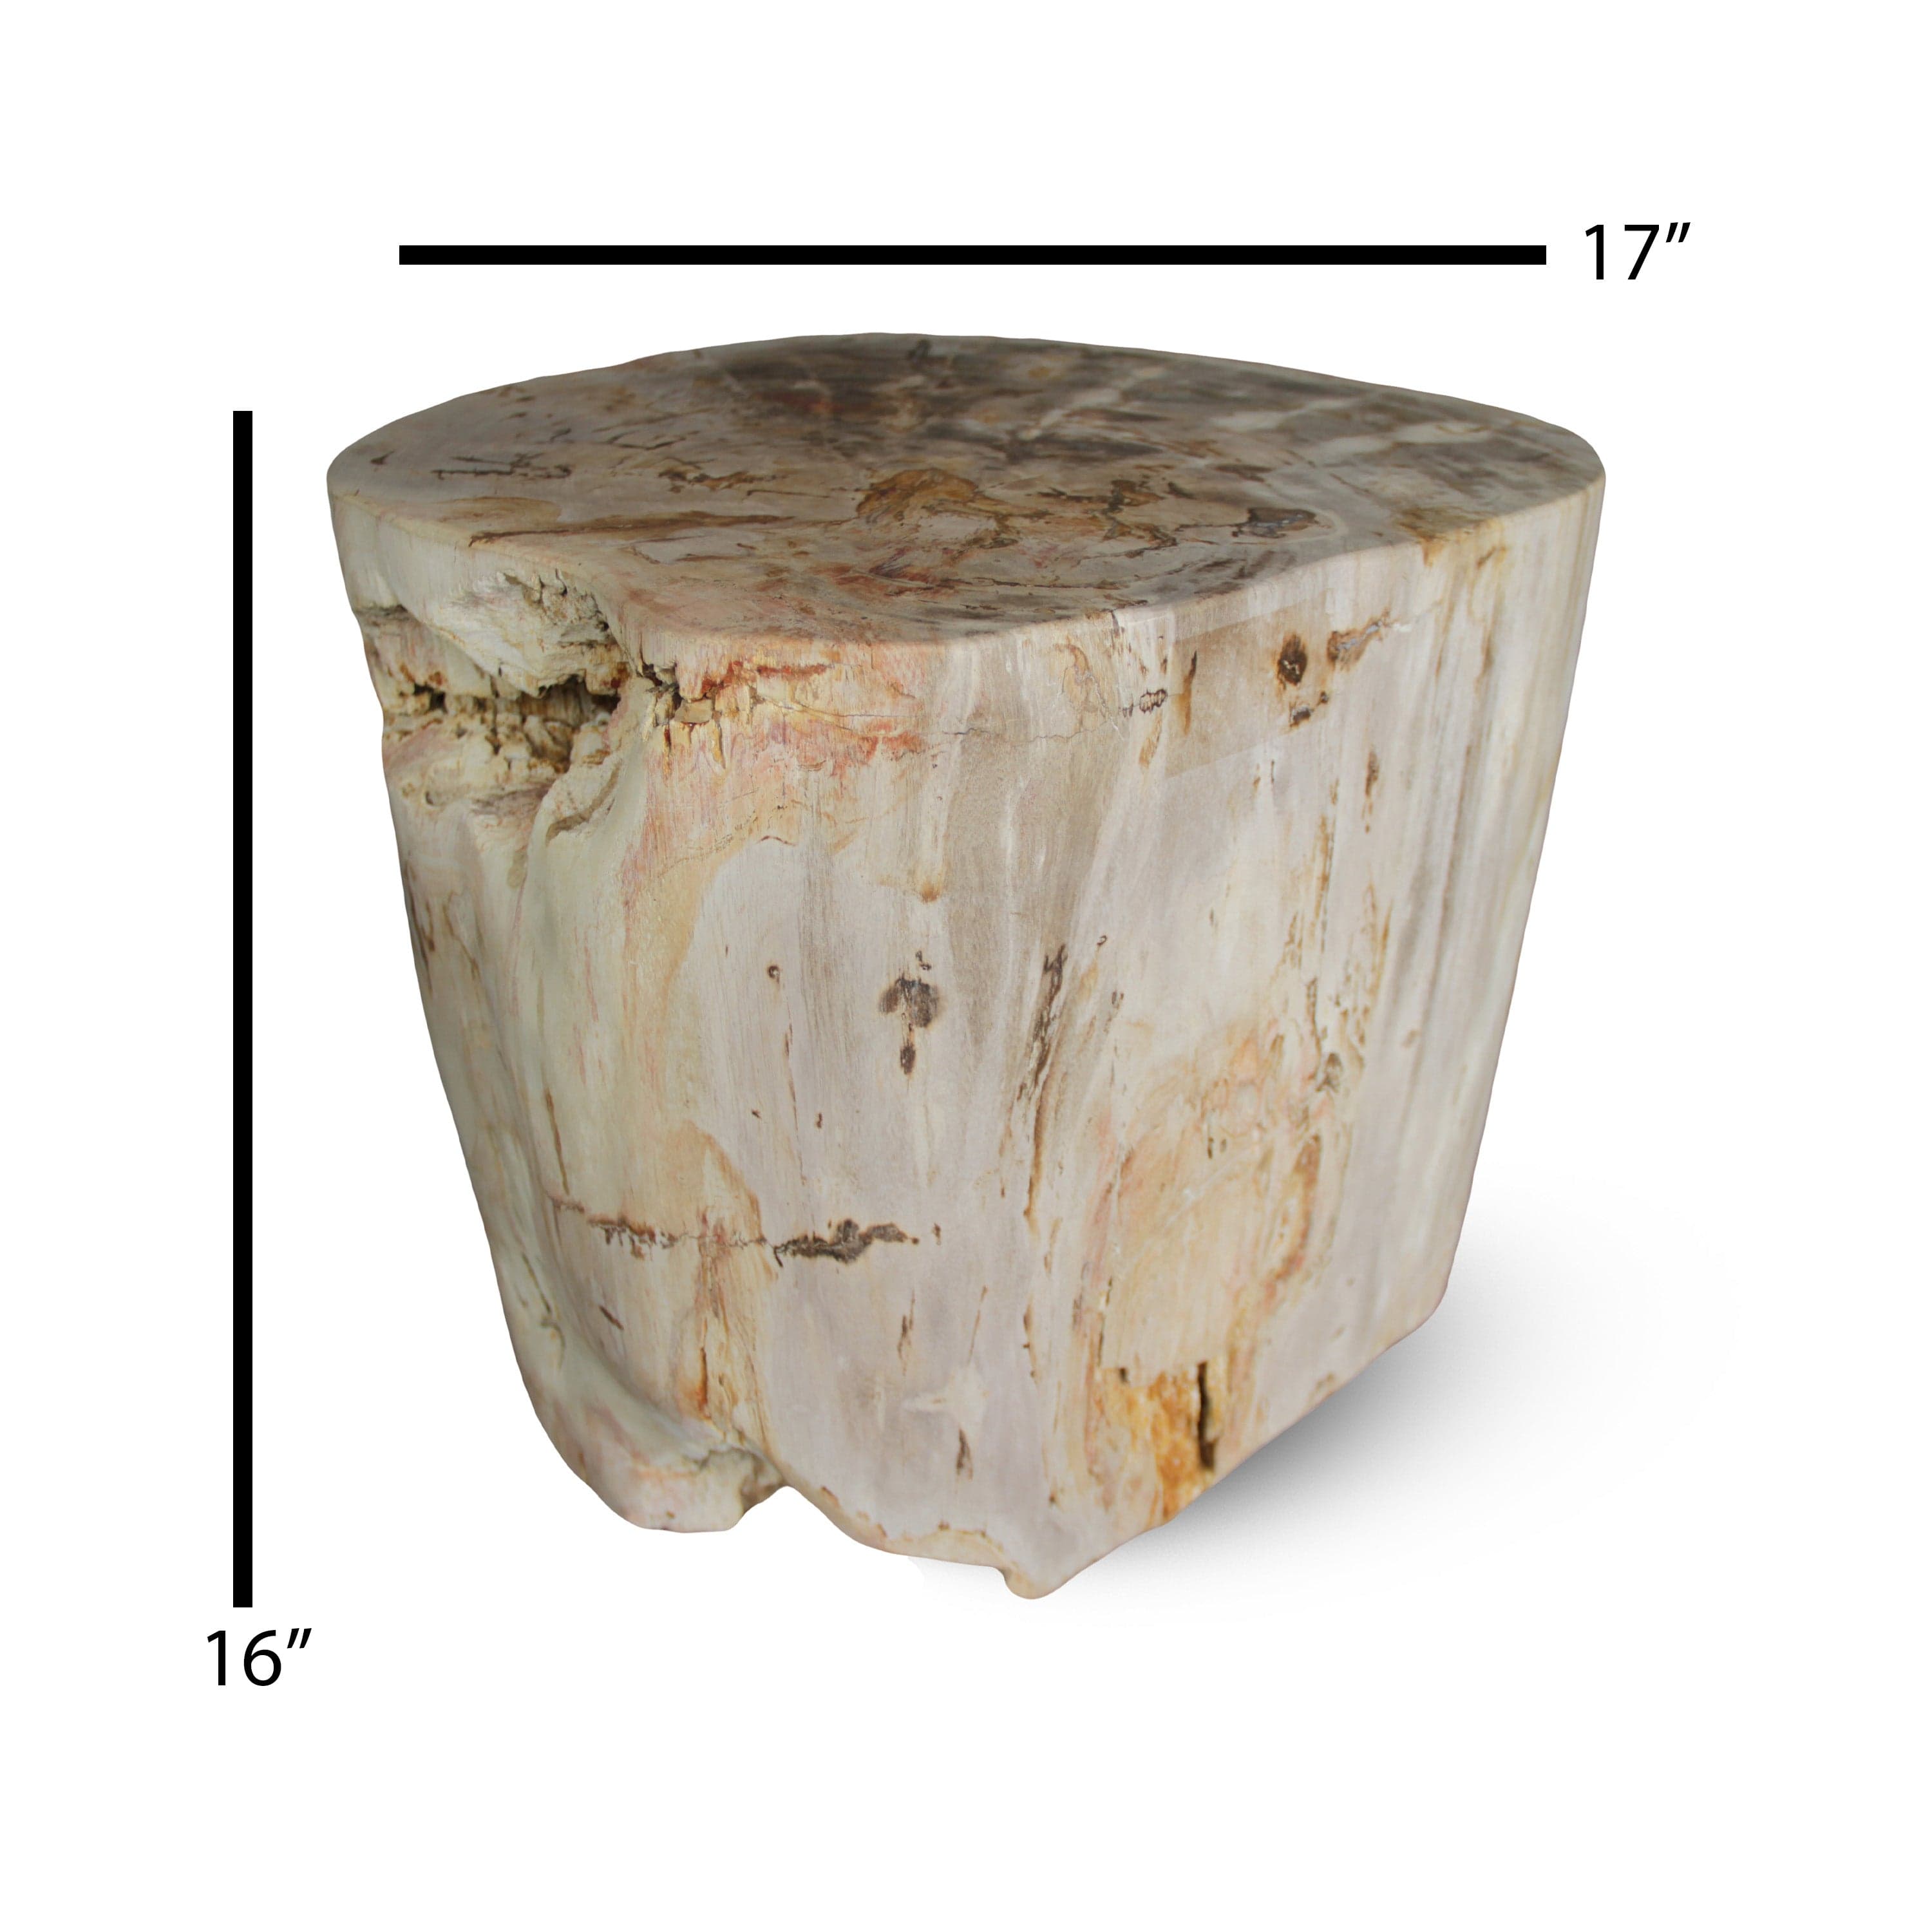 Kalifano Petrified Wood Petrified Wood Round Stump / Stool from Indonesia - 16" / 231 lbs PWS4200.005